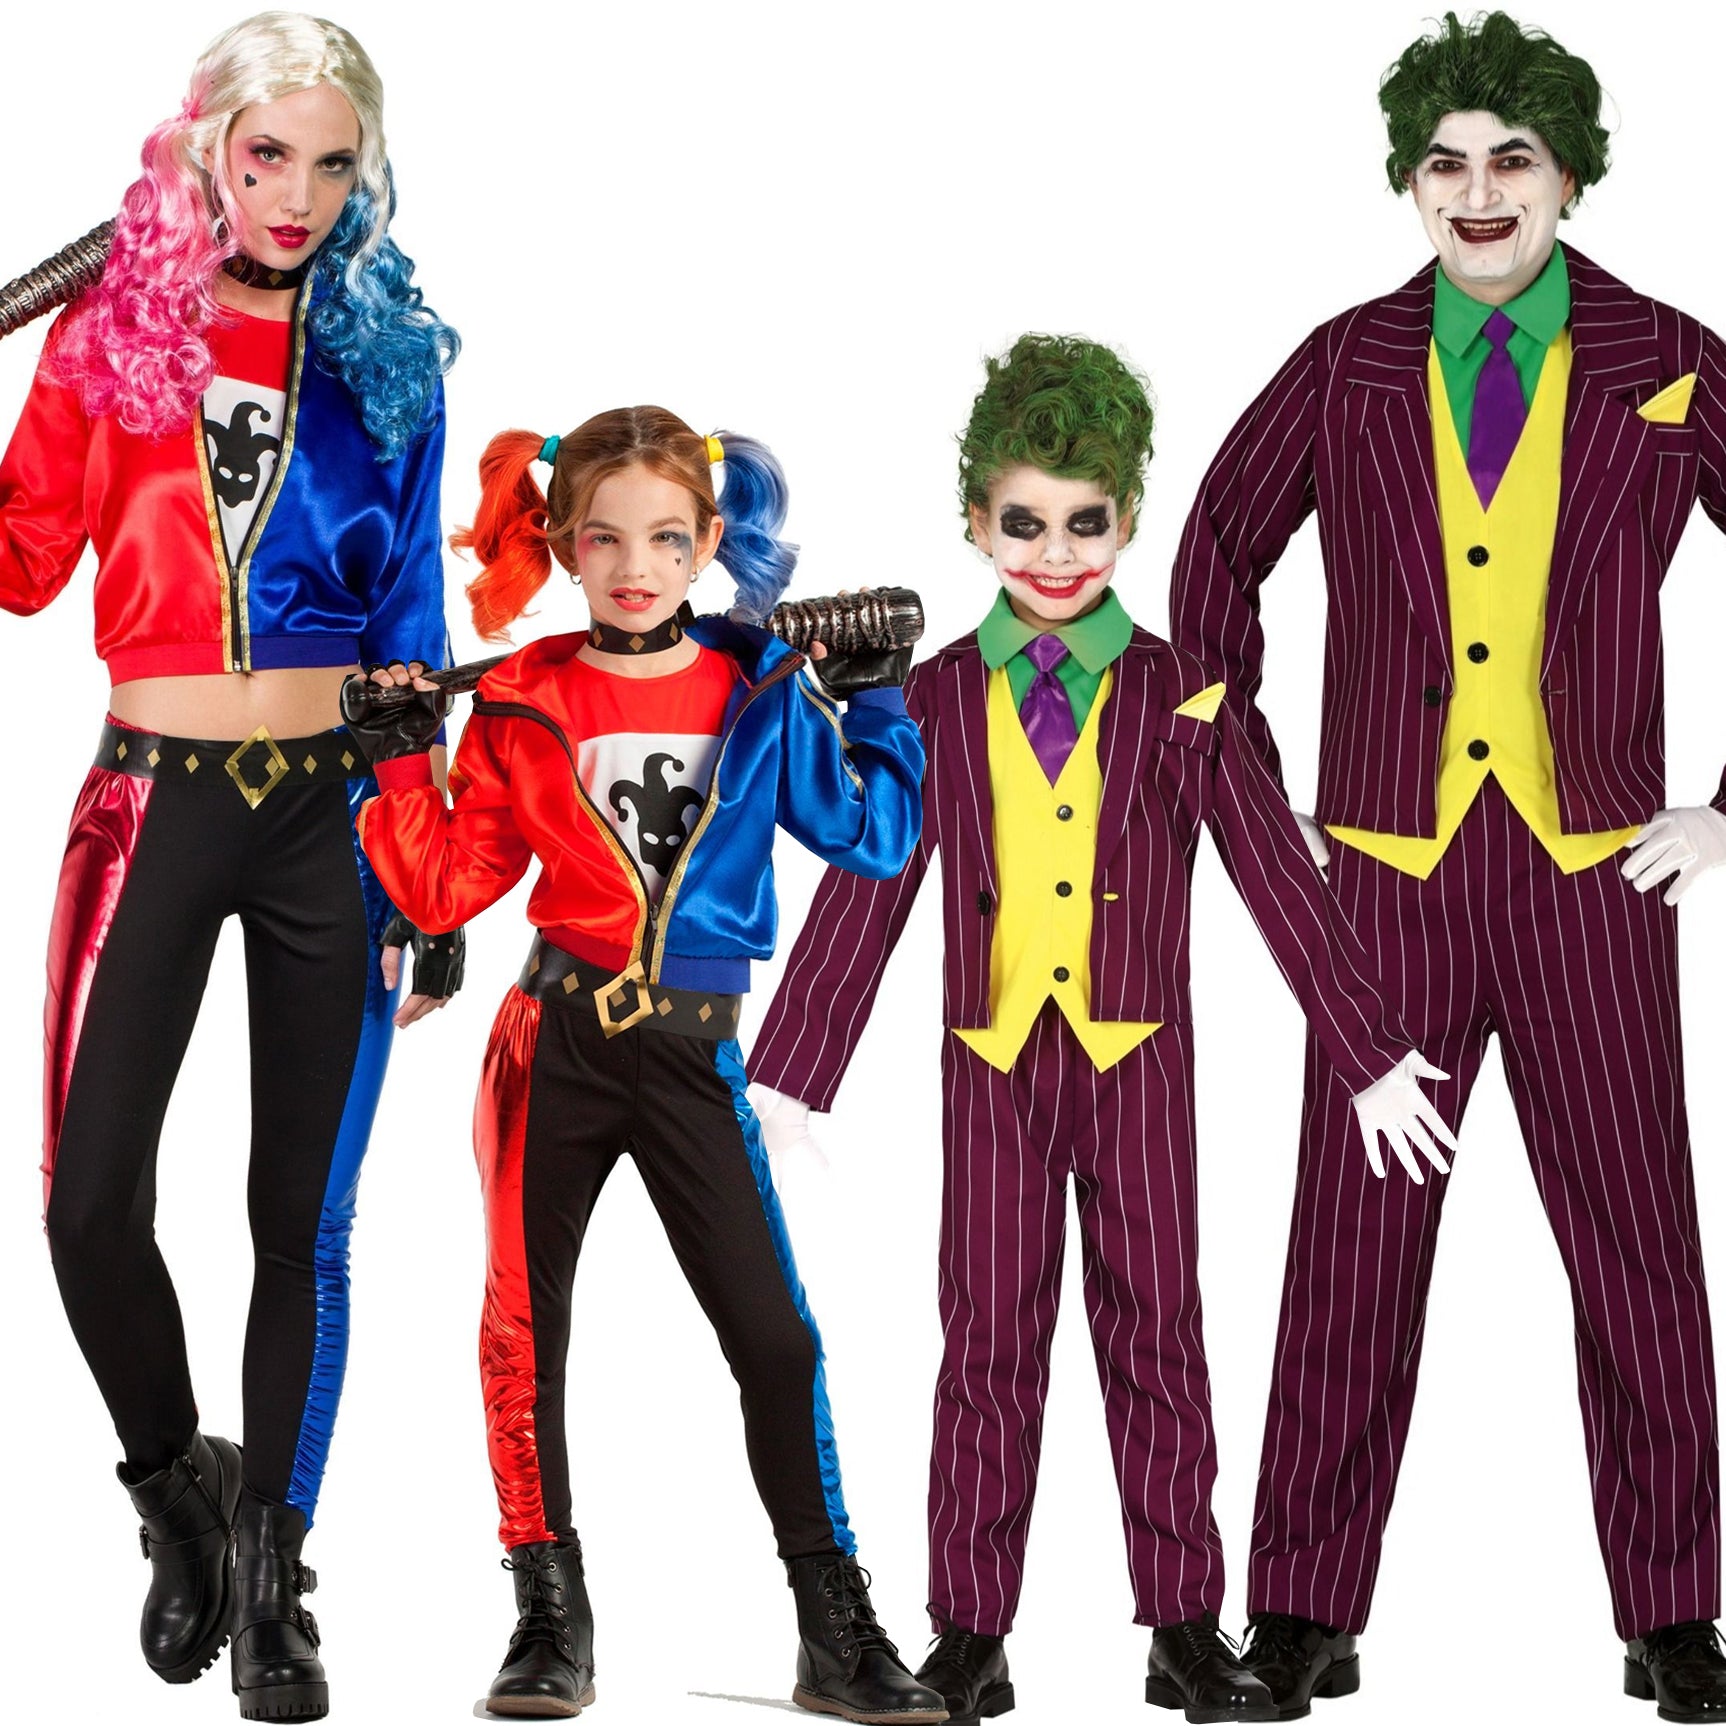 Acquista: Costumi di gruppo da Harley Quinn e Joker Crazy